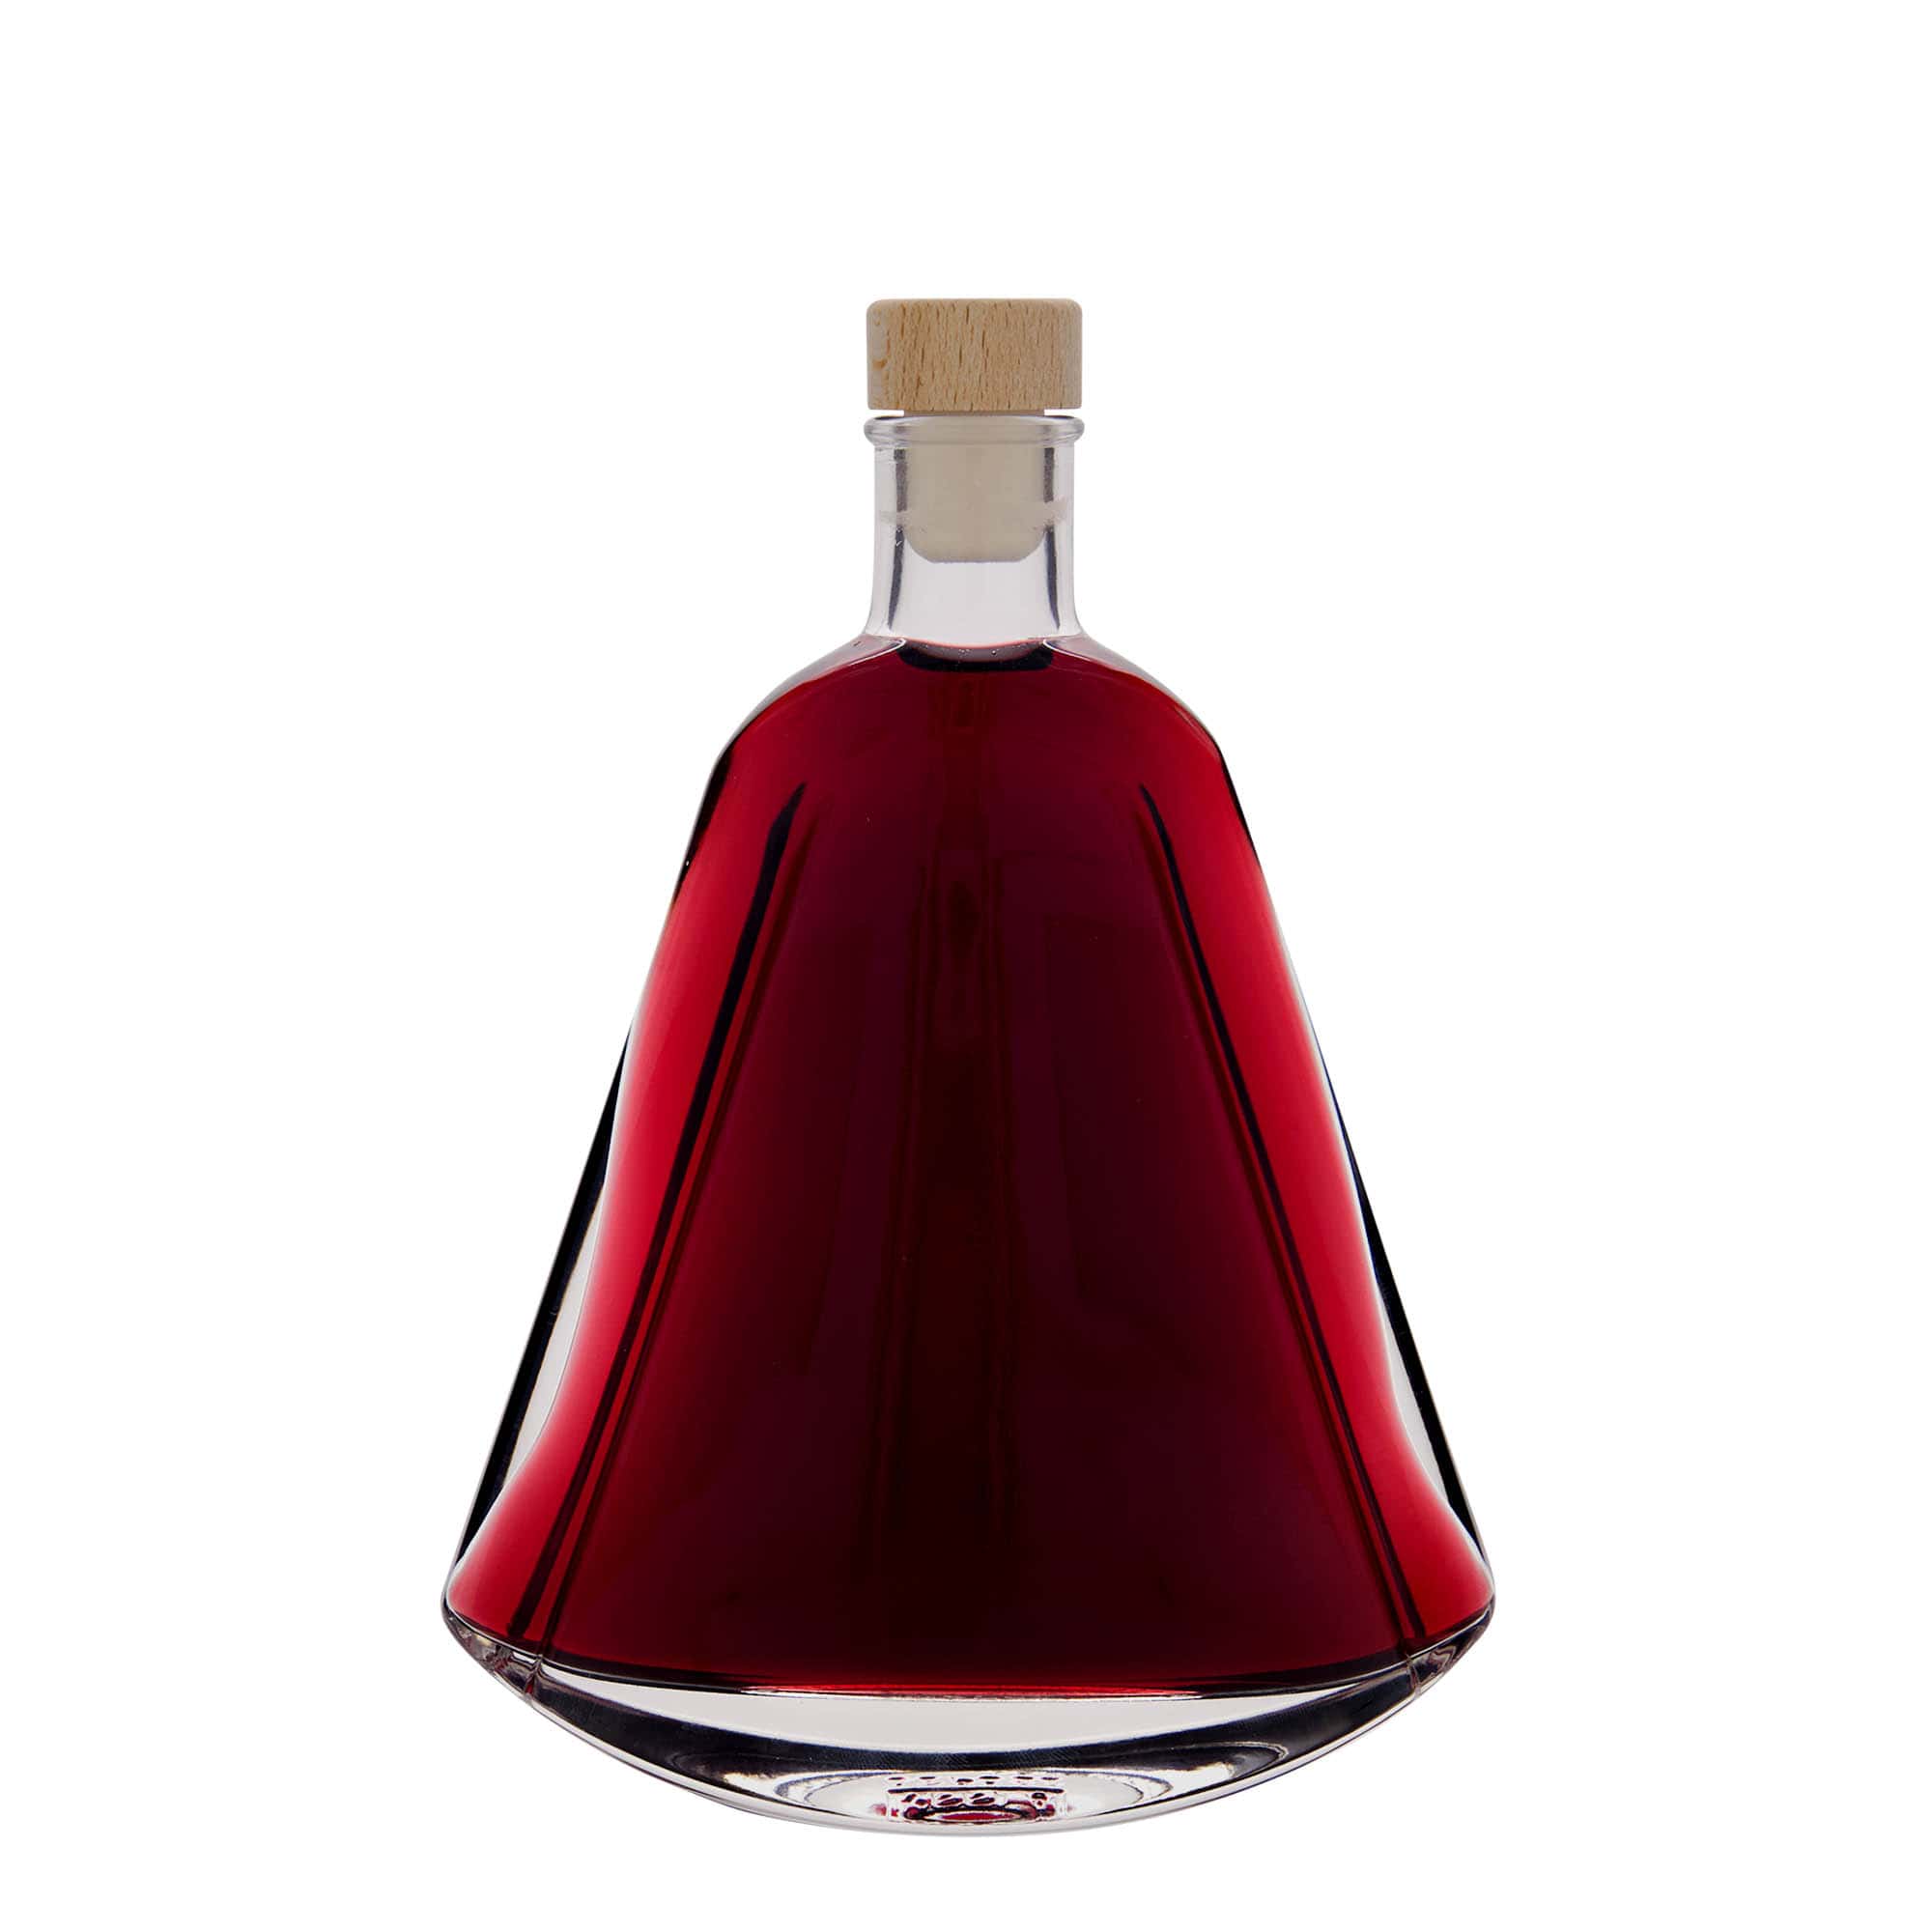 350 ml glass bottle 'Maurizio', oval, closure: cork